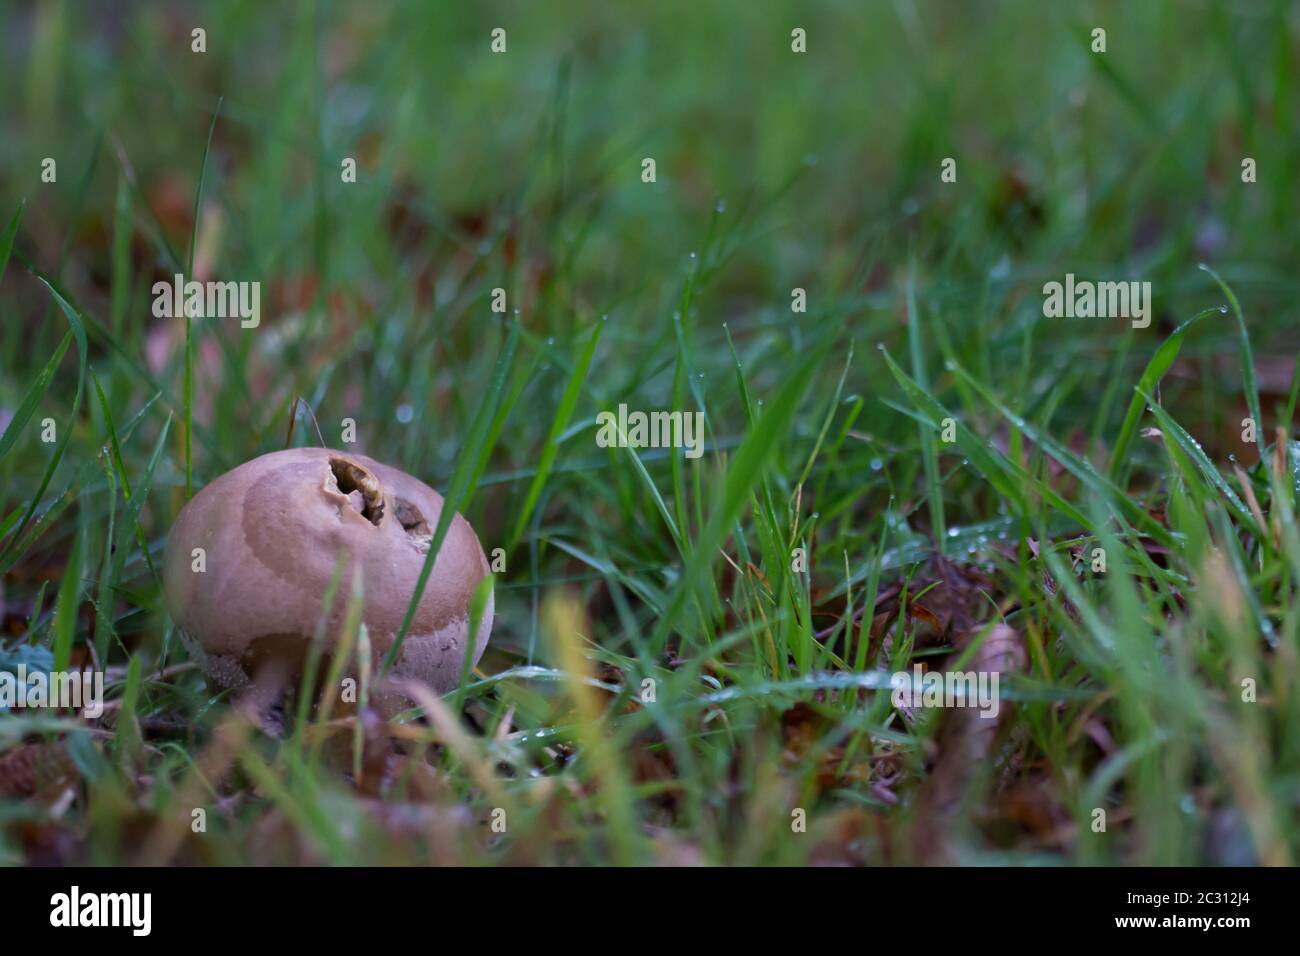 Old common puffball (Lycoperdon perlatum) mushrrom in the grass Stock Photo